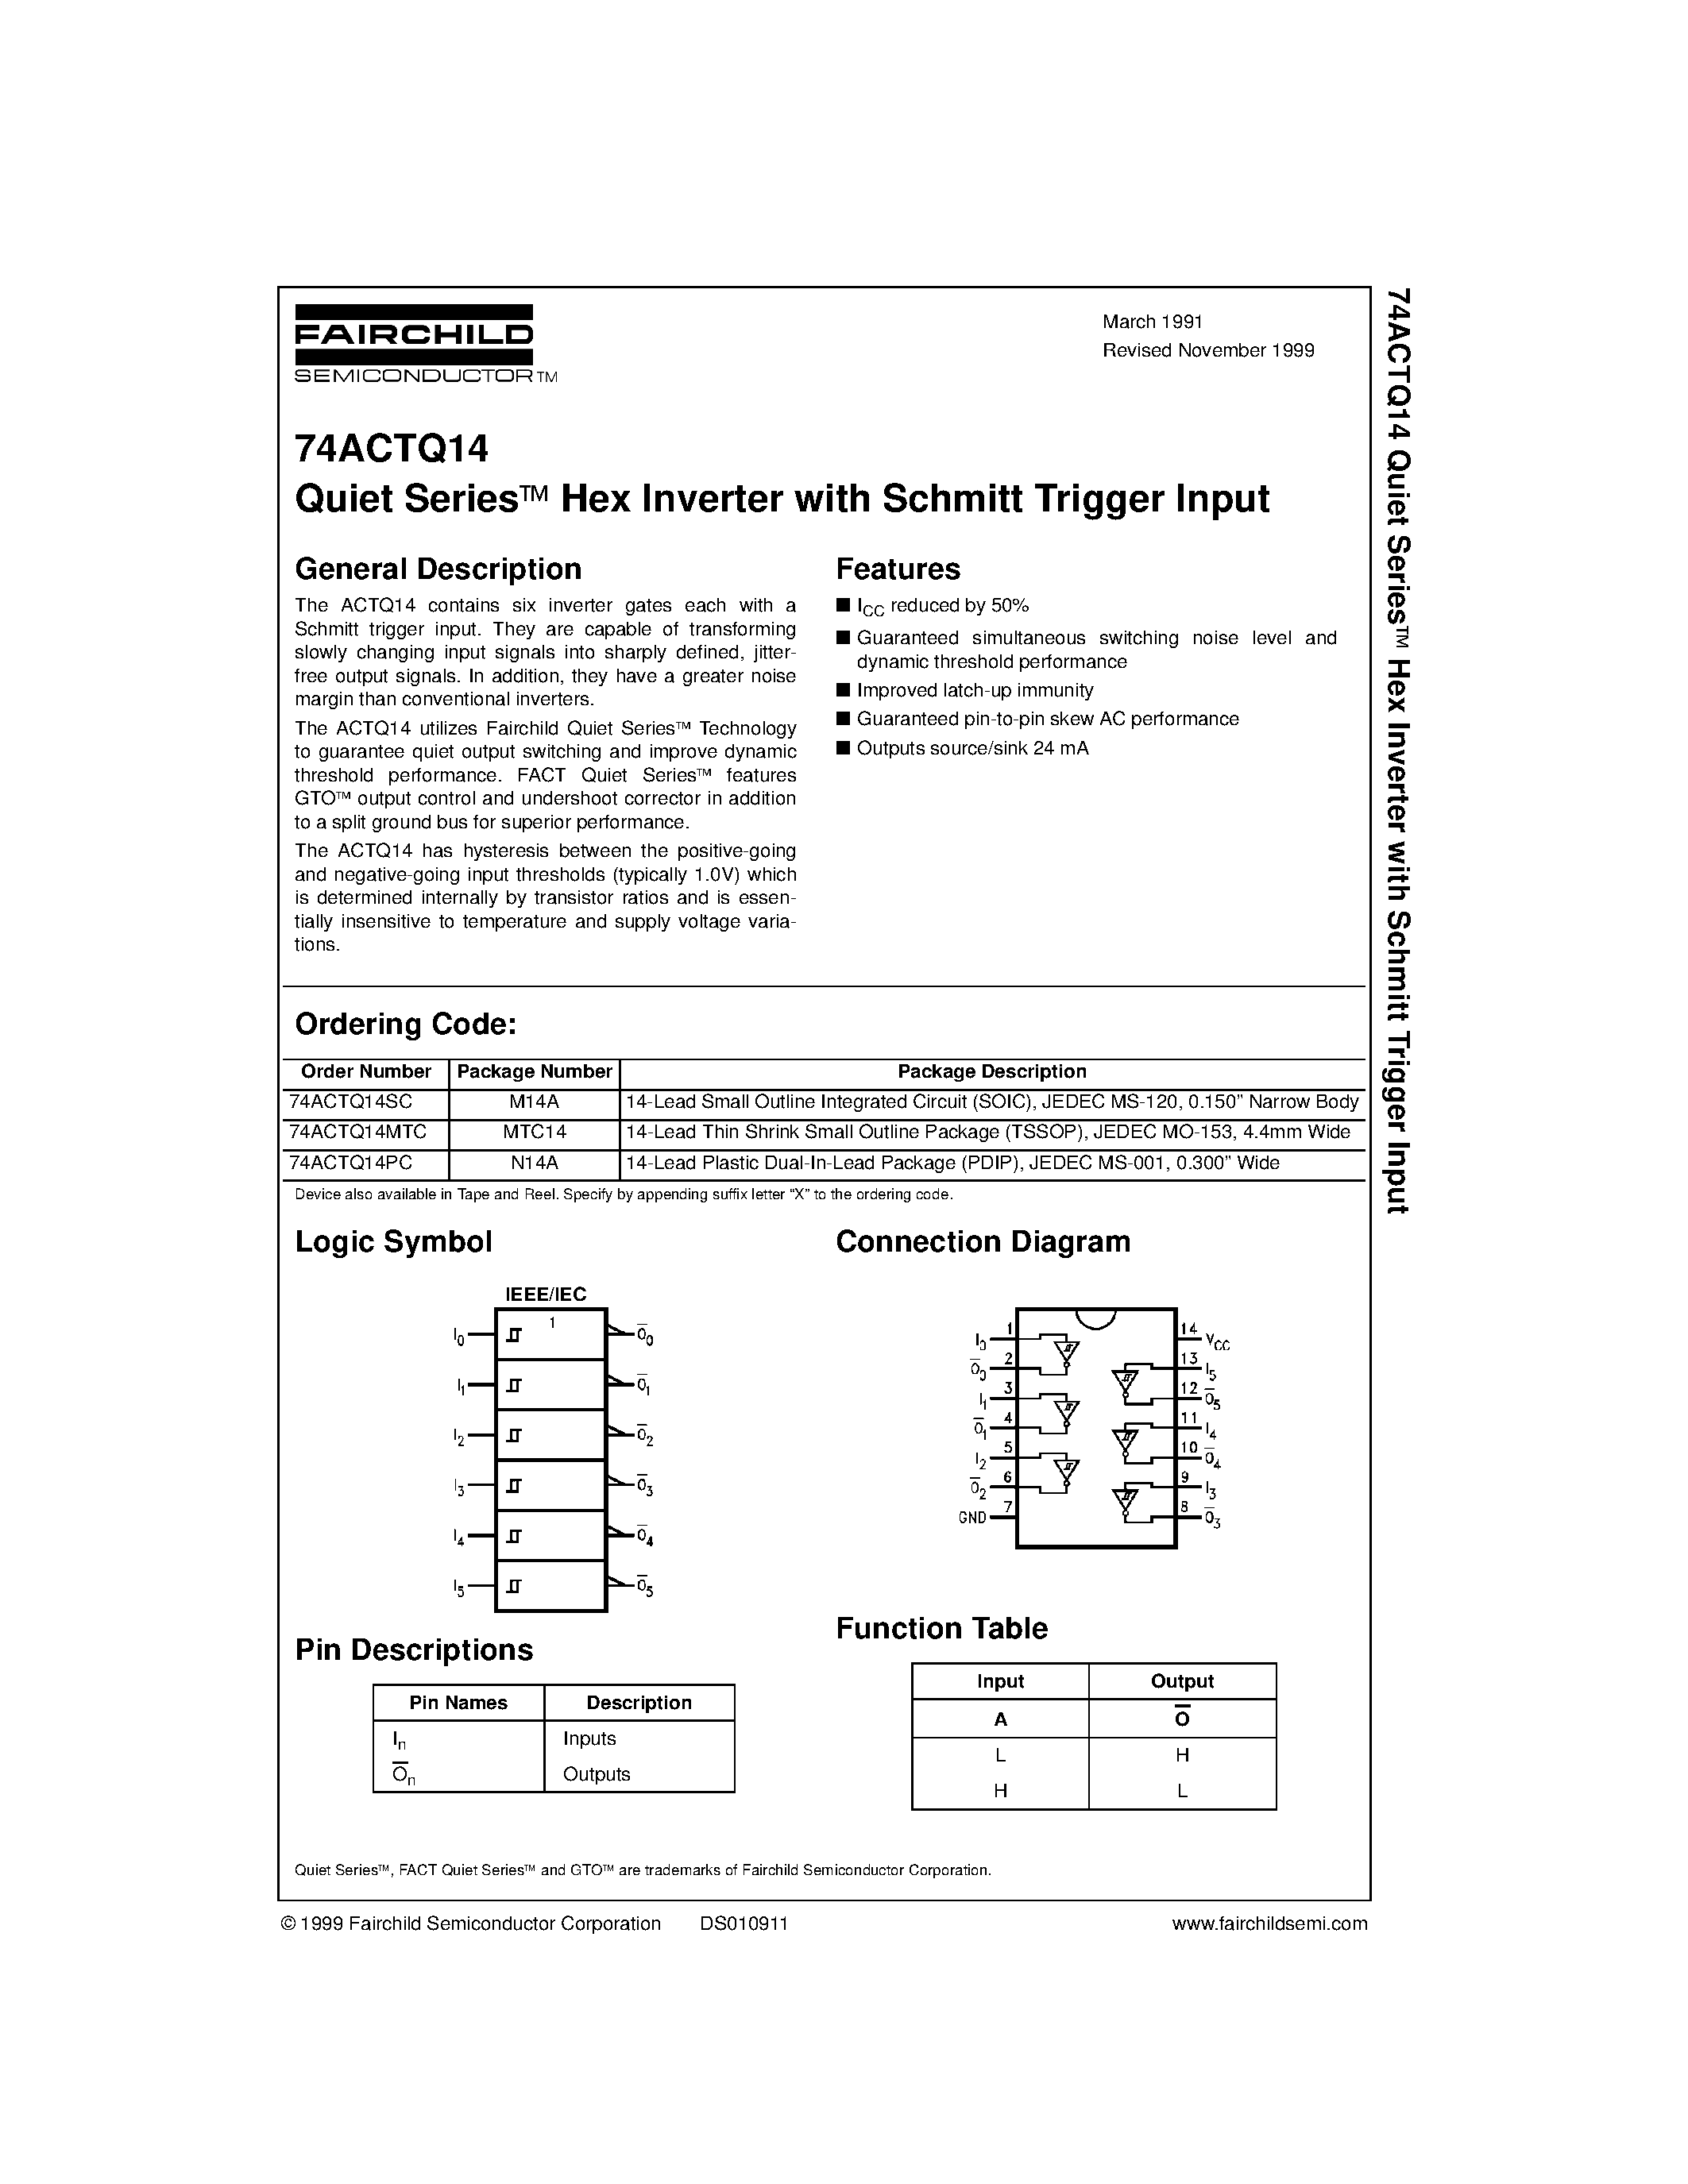 Даташит 74ACTQ14SC - Quiet Series Hex Inverter with Schmitt Trigger Input страница 1